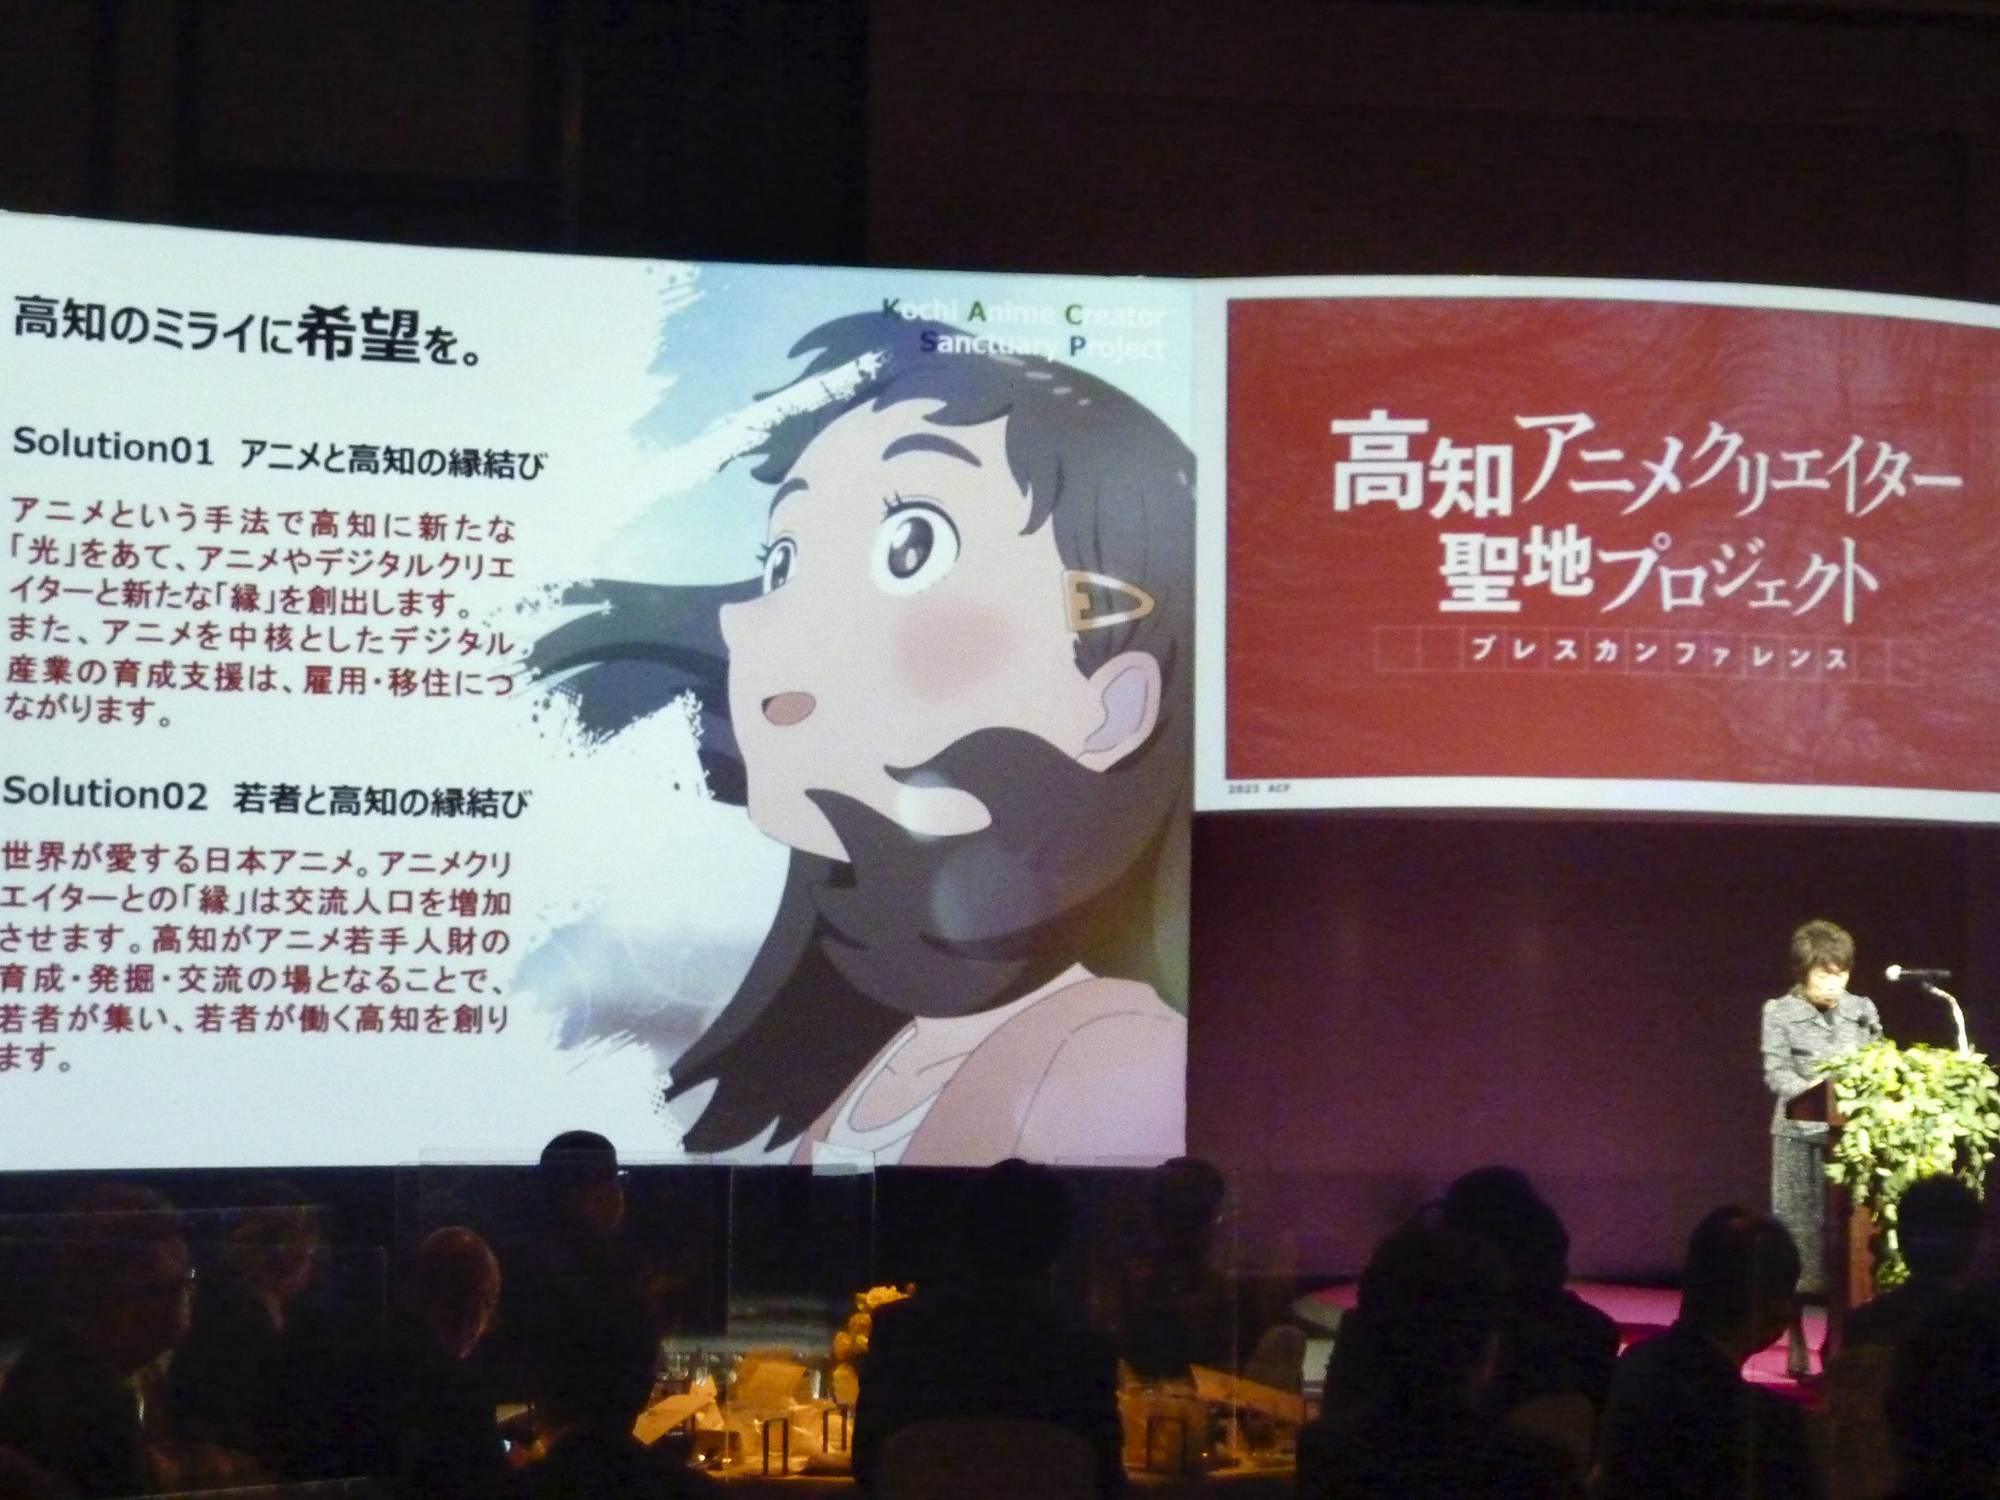 Kochi seeks to become anime and manga hub | The Japan Times